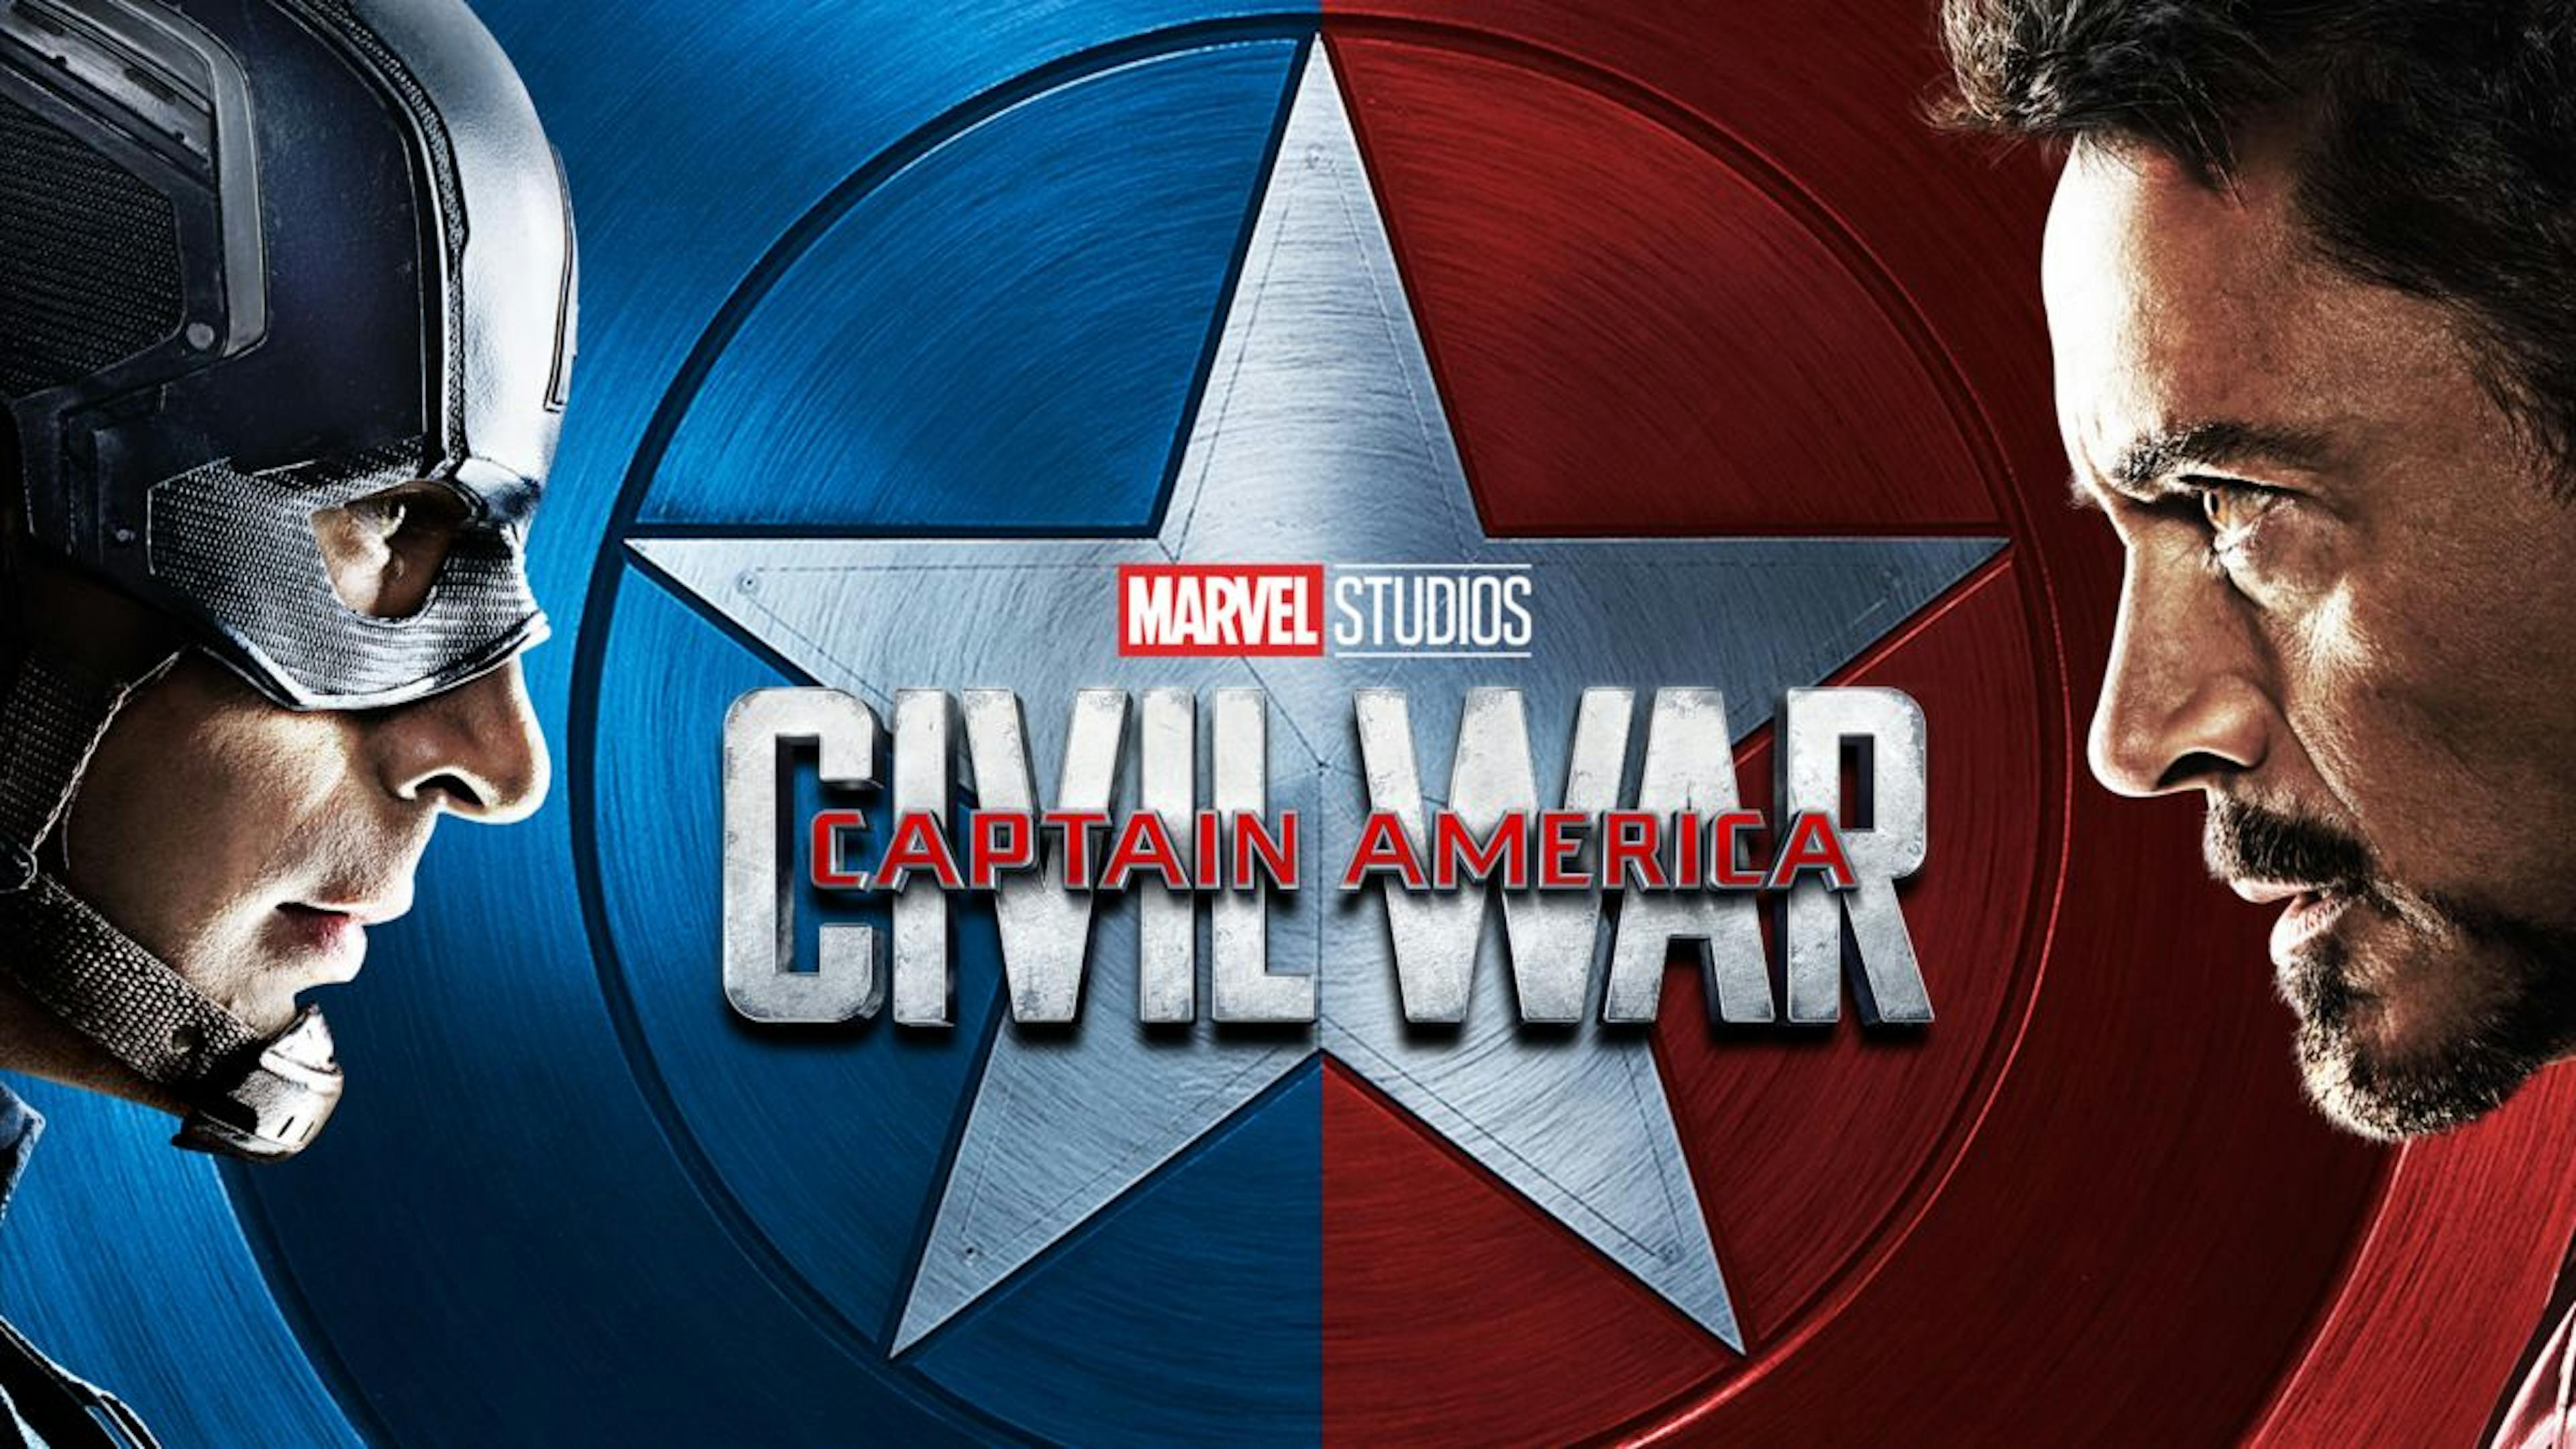 https://www.disneyplus.com/movies/marvel-studios-captain-america-civil-war/4ovfyKnnIBCg